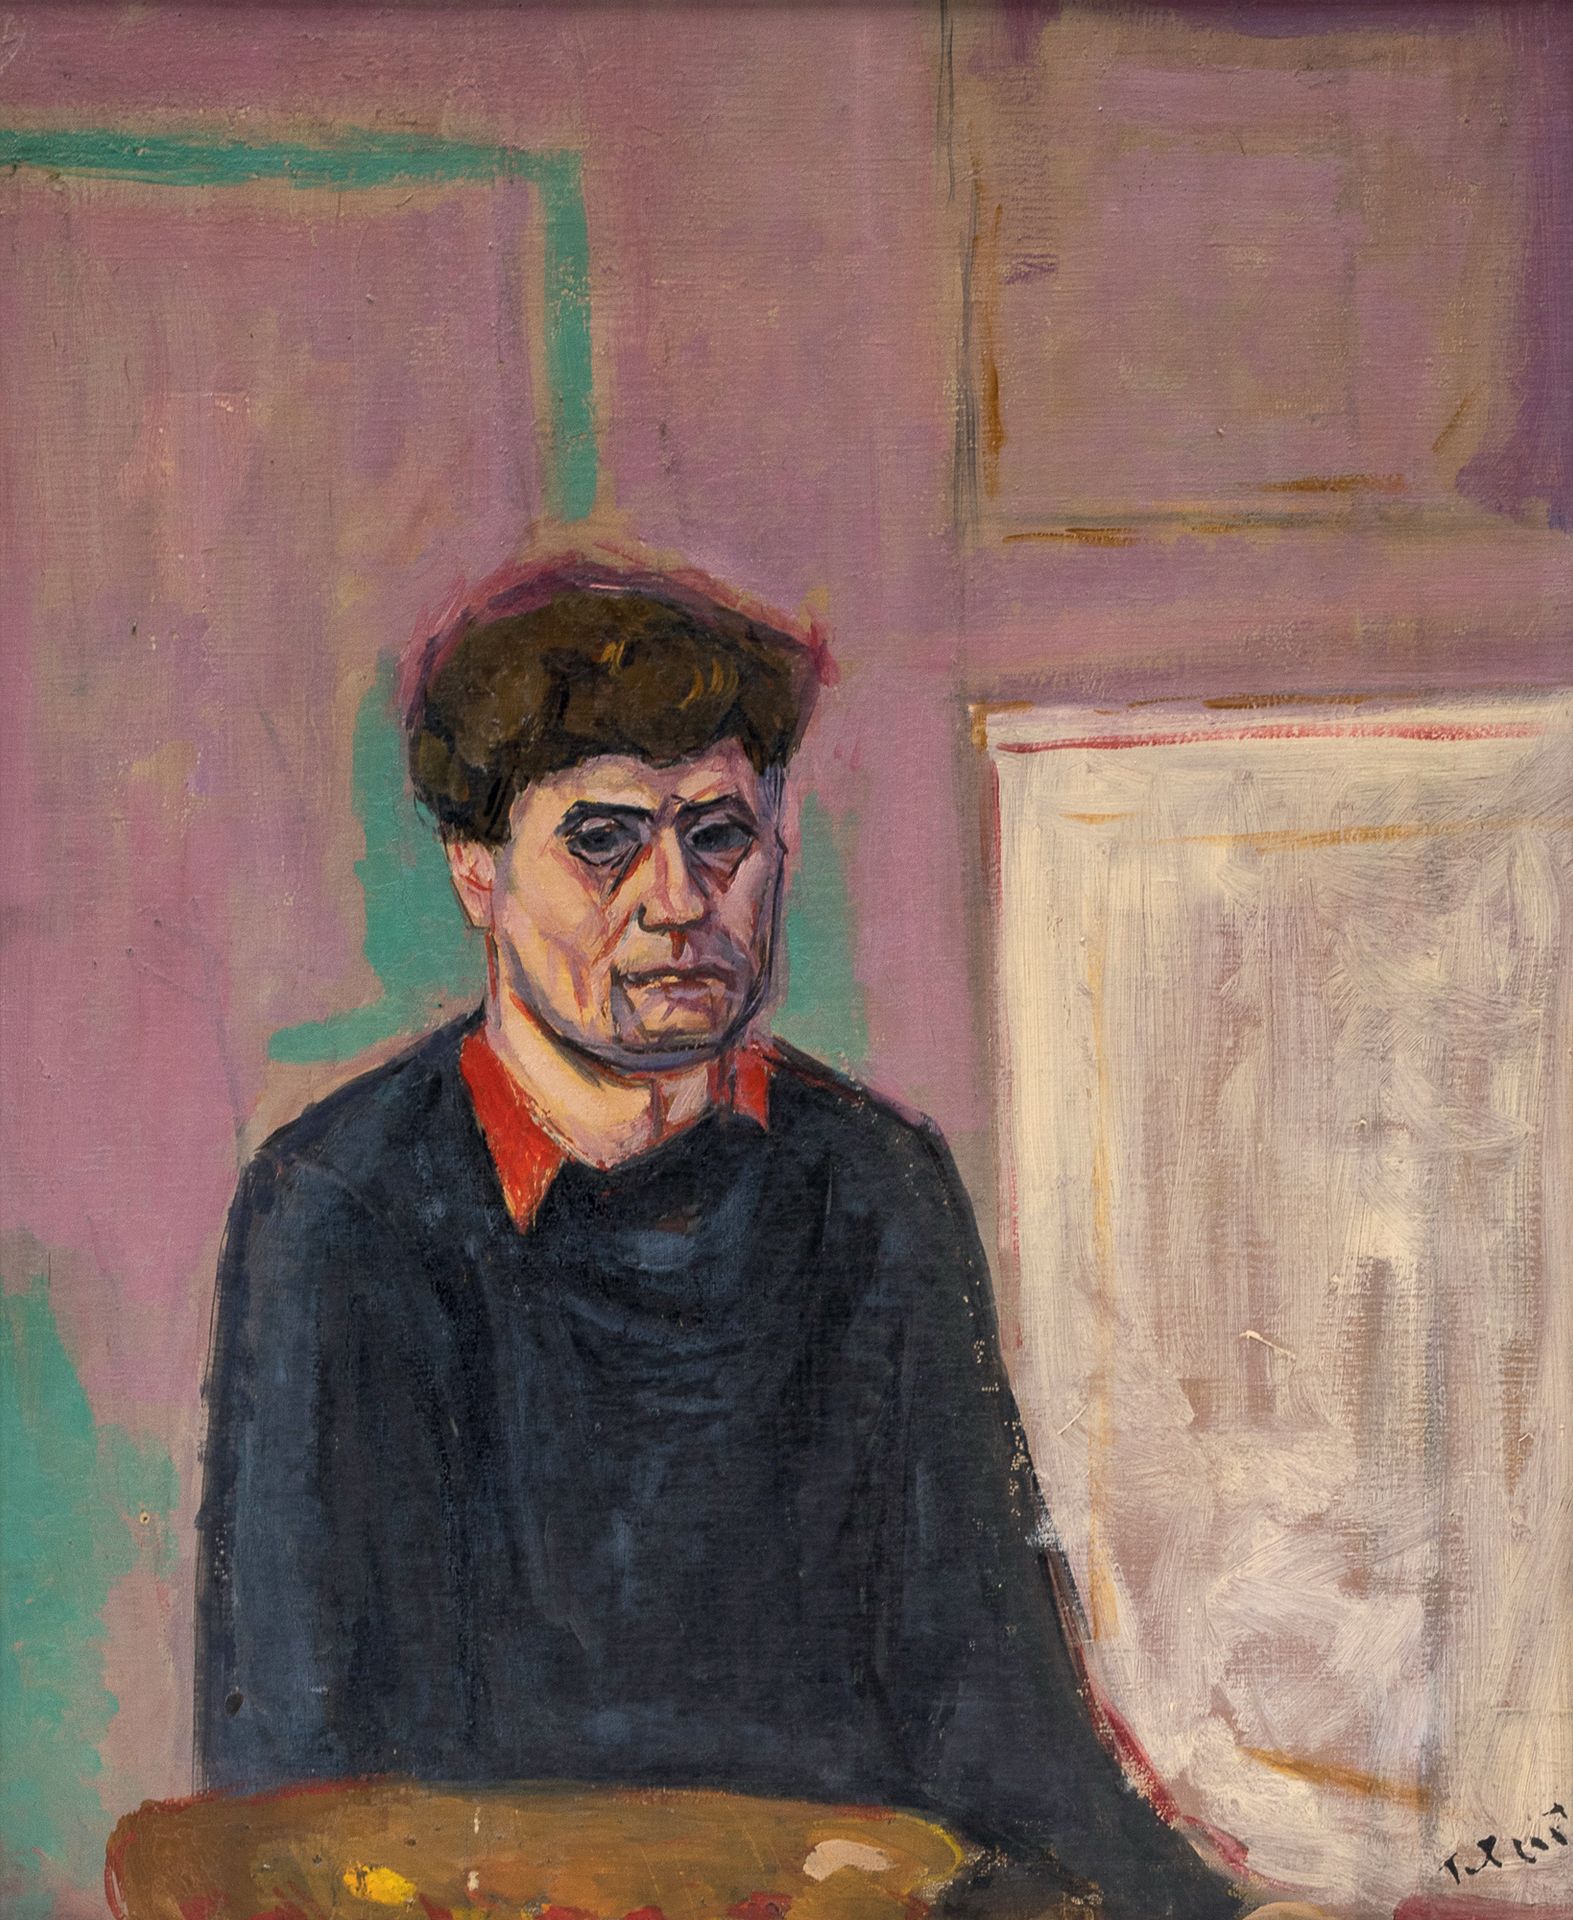 PIERRE TAL COAT (1905-1985) - Selbstporträt, 1935
Öl auf Leinwand, rechts unten &hellip;